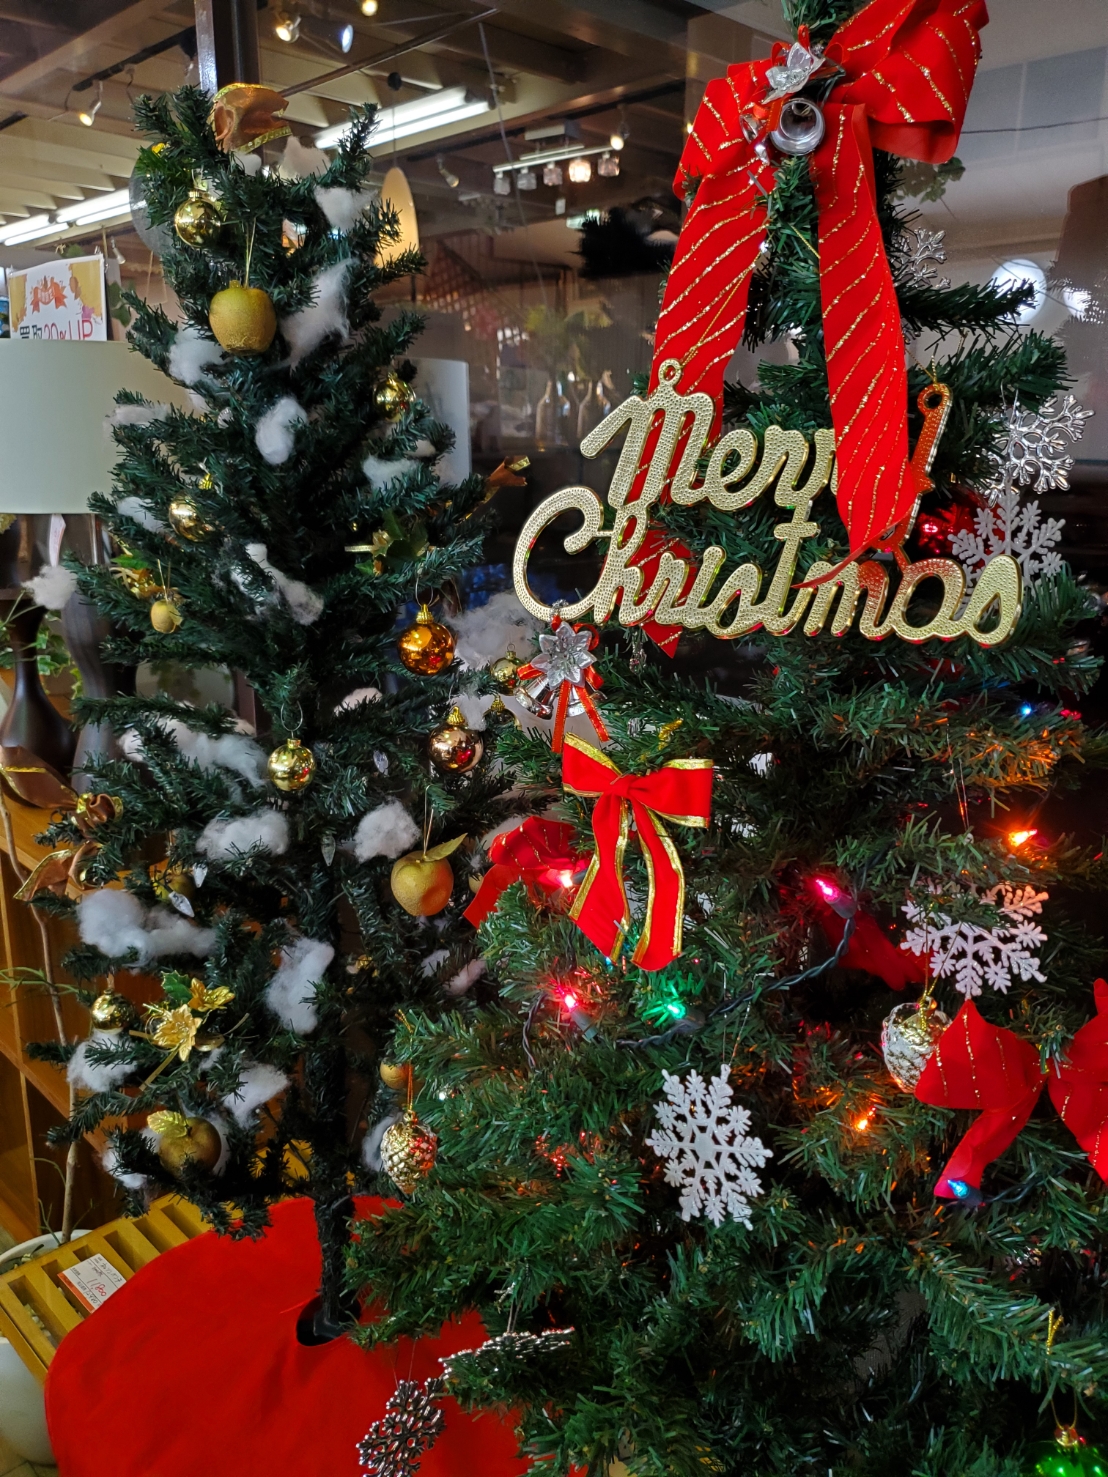 Christmas クリスマスツリー インテリア Xmas 雑貨 オーナメント付き ライト付き ツリー 入荷しました 愛知と岐阜のリサイクルショップ 再良市場